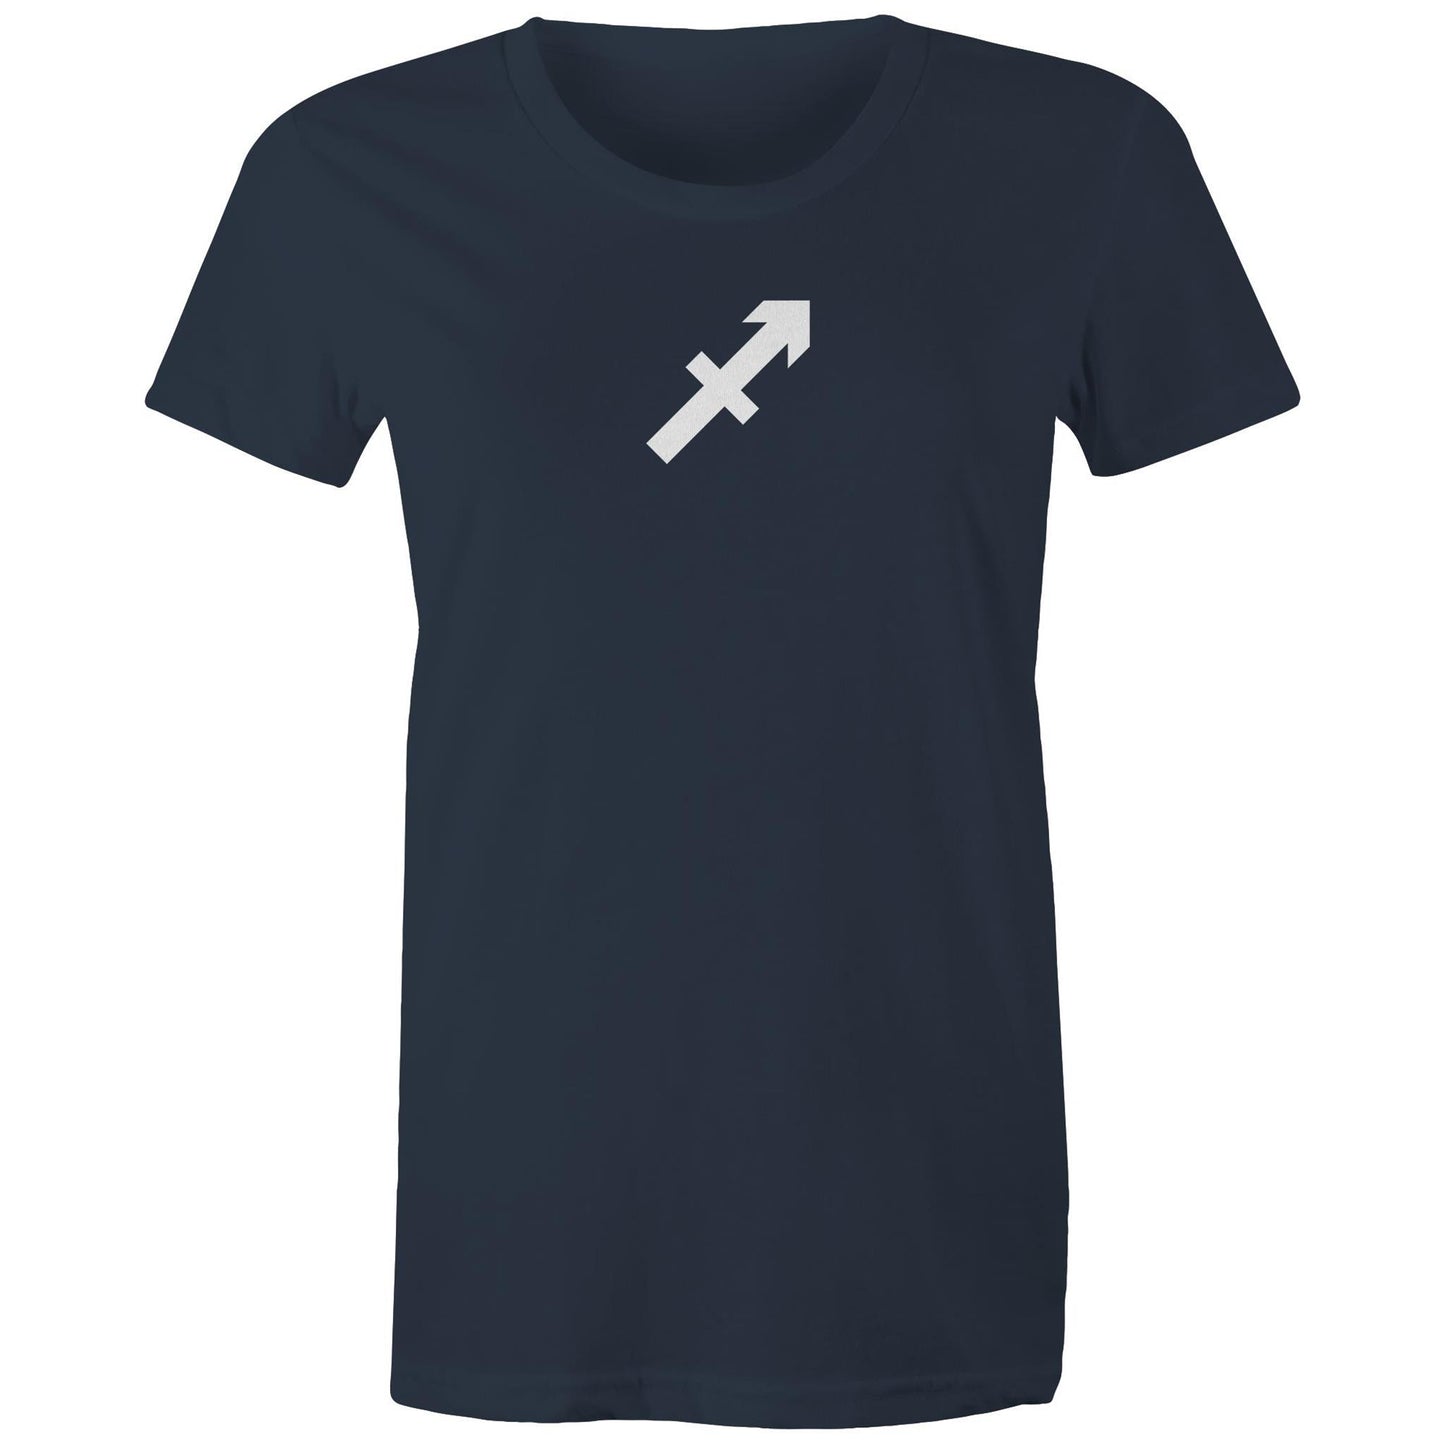 Sagittarius T Shirts for Women